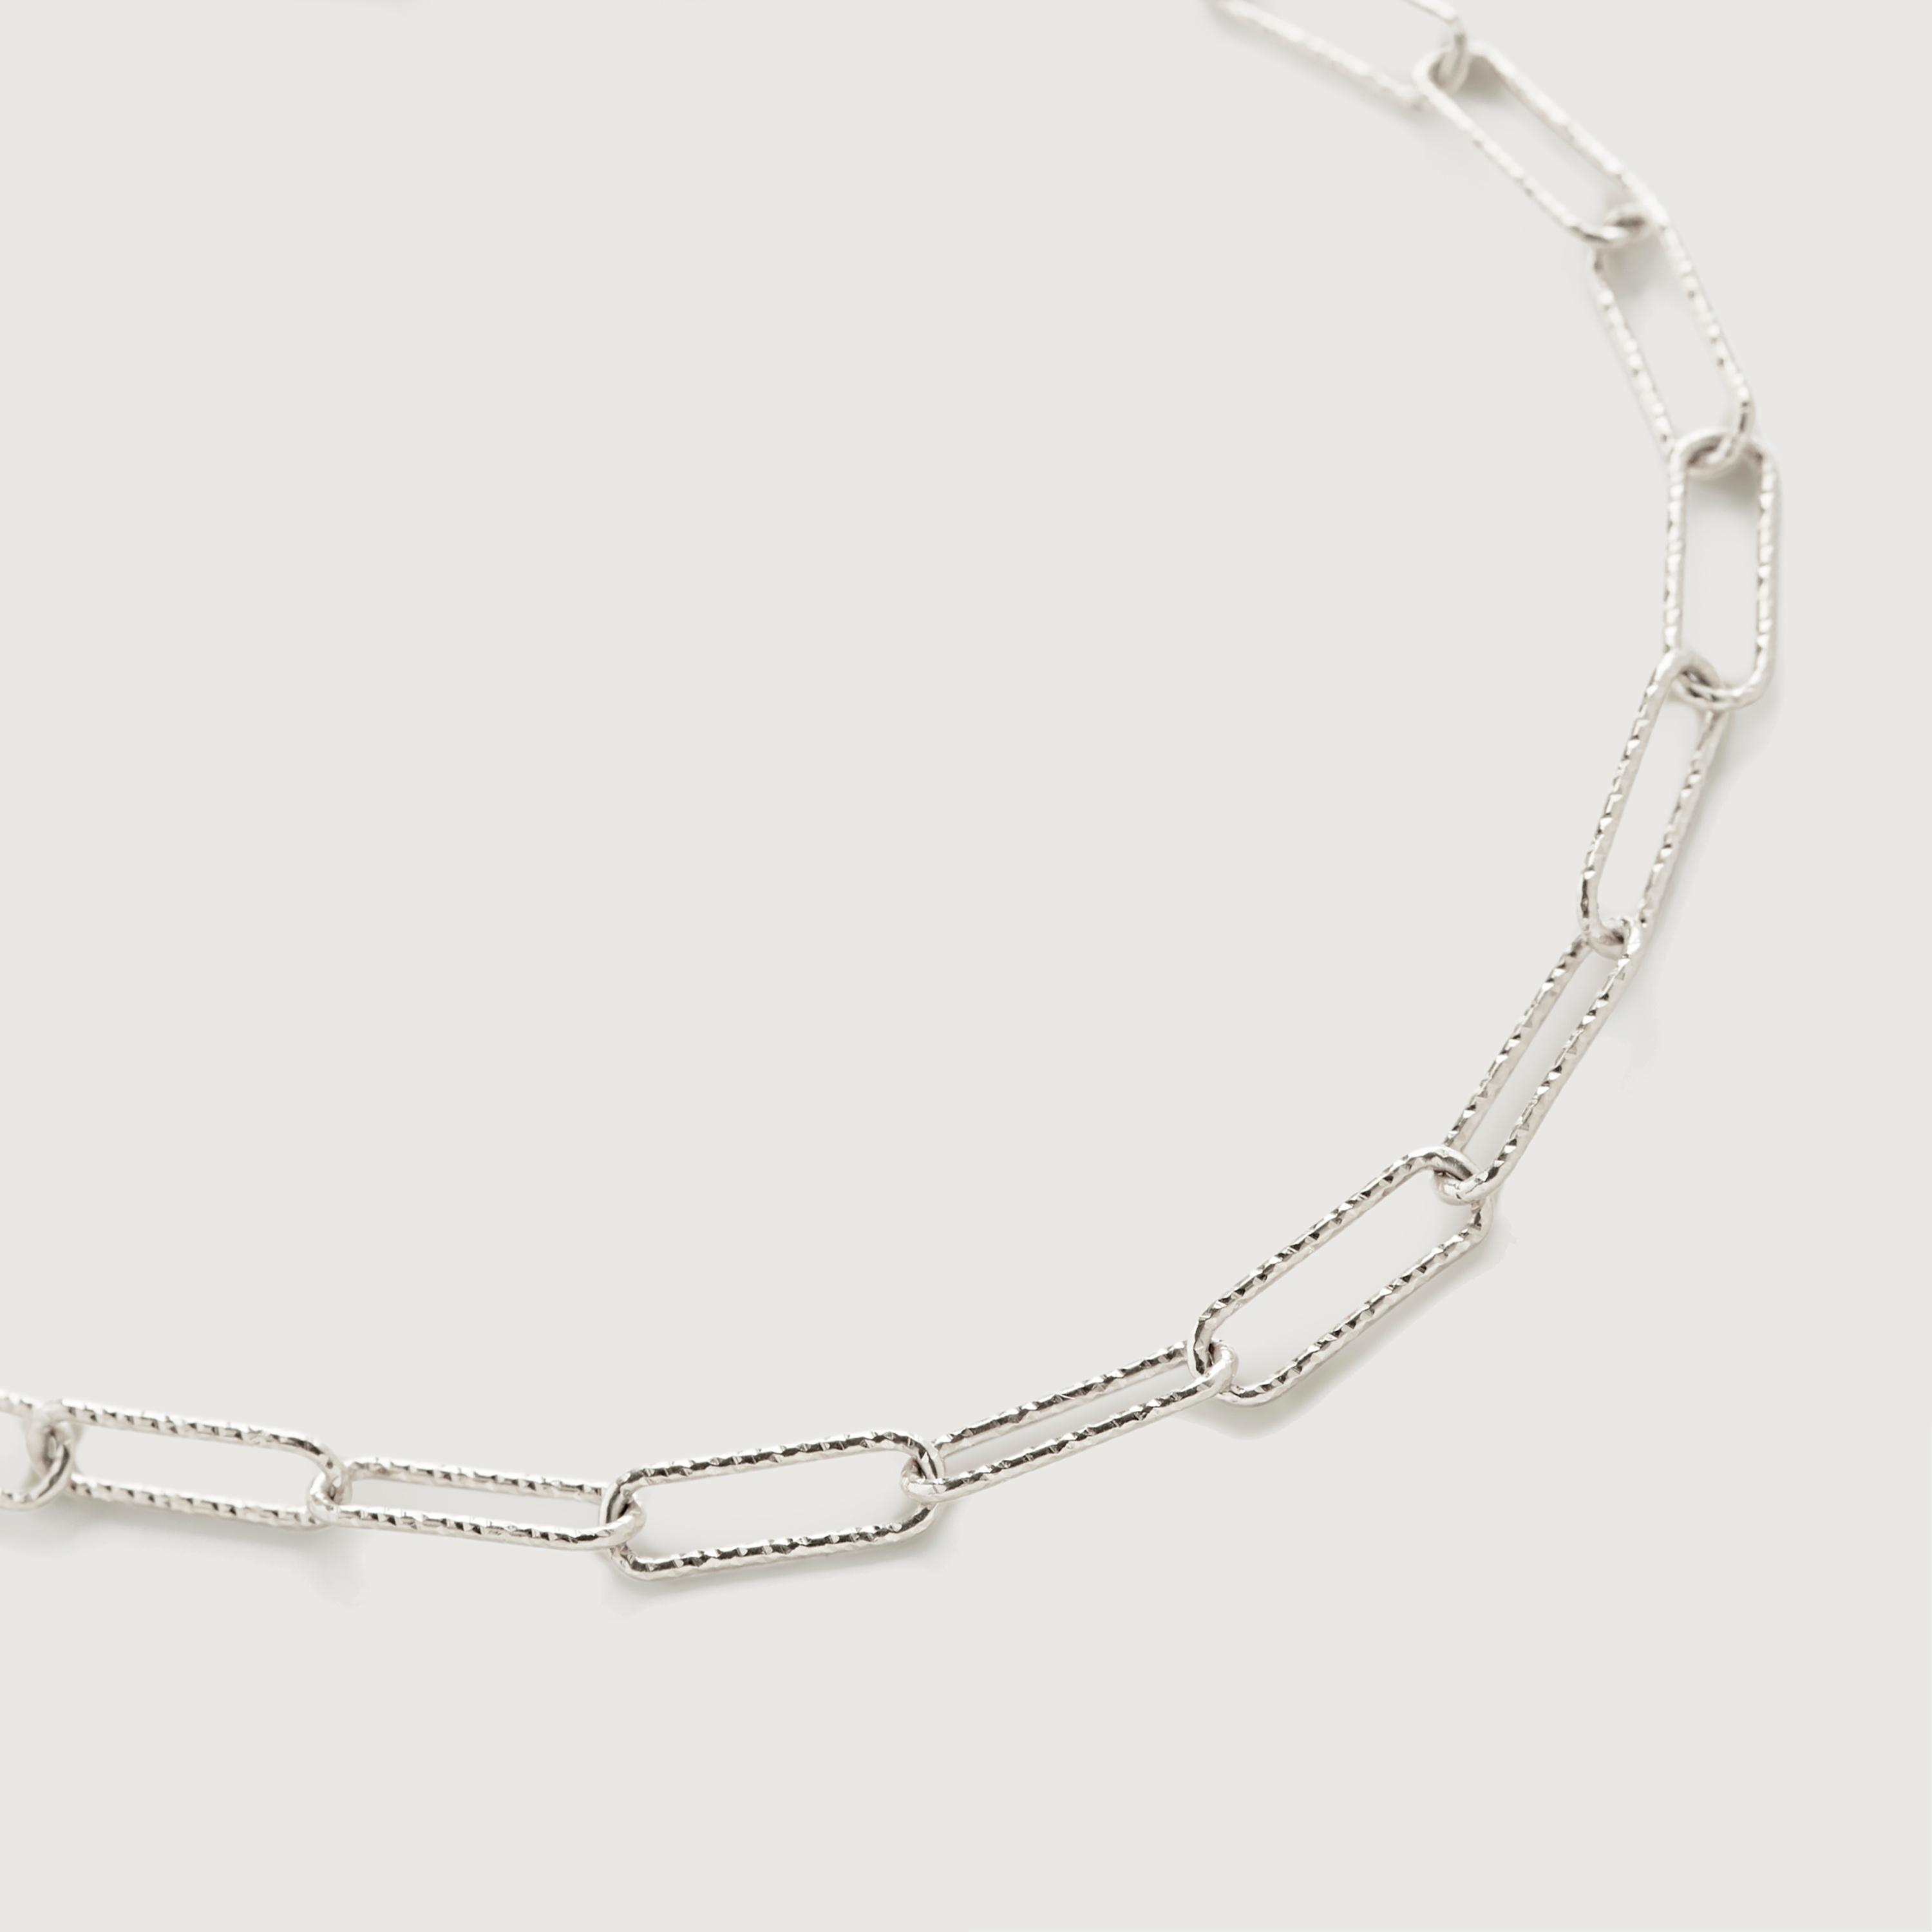 Monica Vinader Alta Textured Chain Necklace Adjustable 61cm/24 